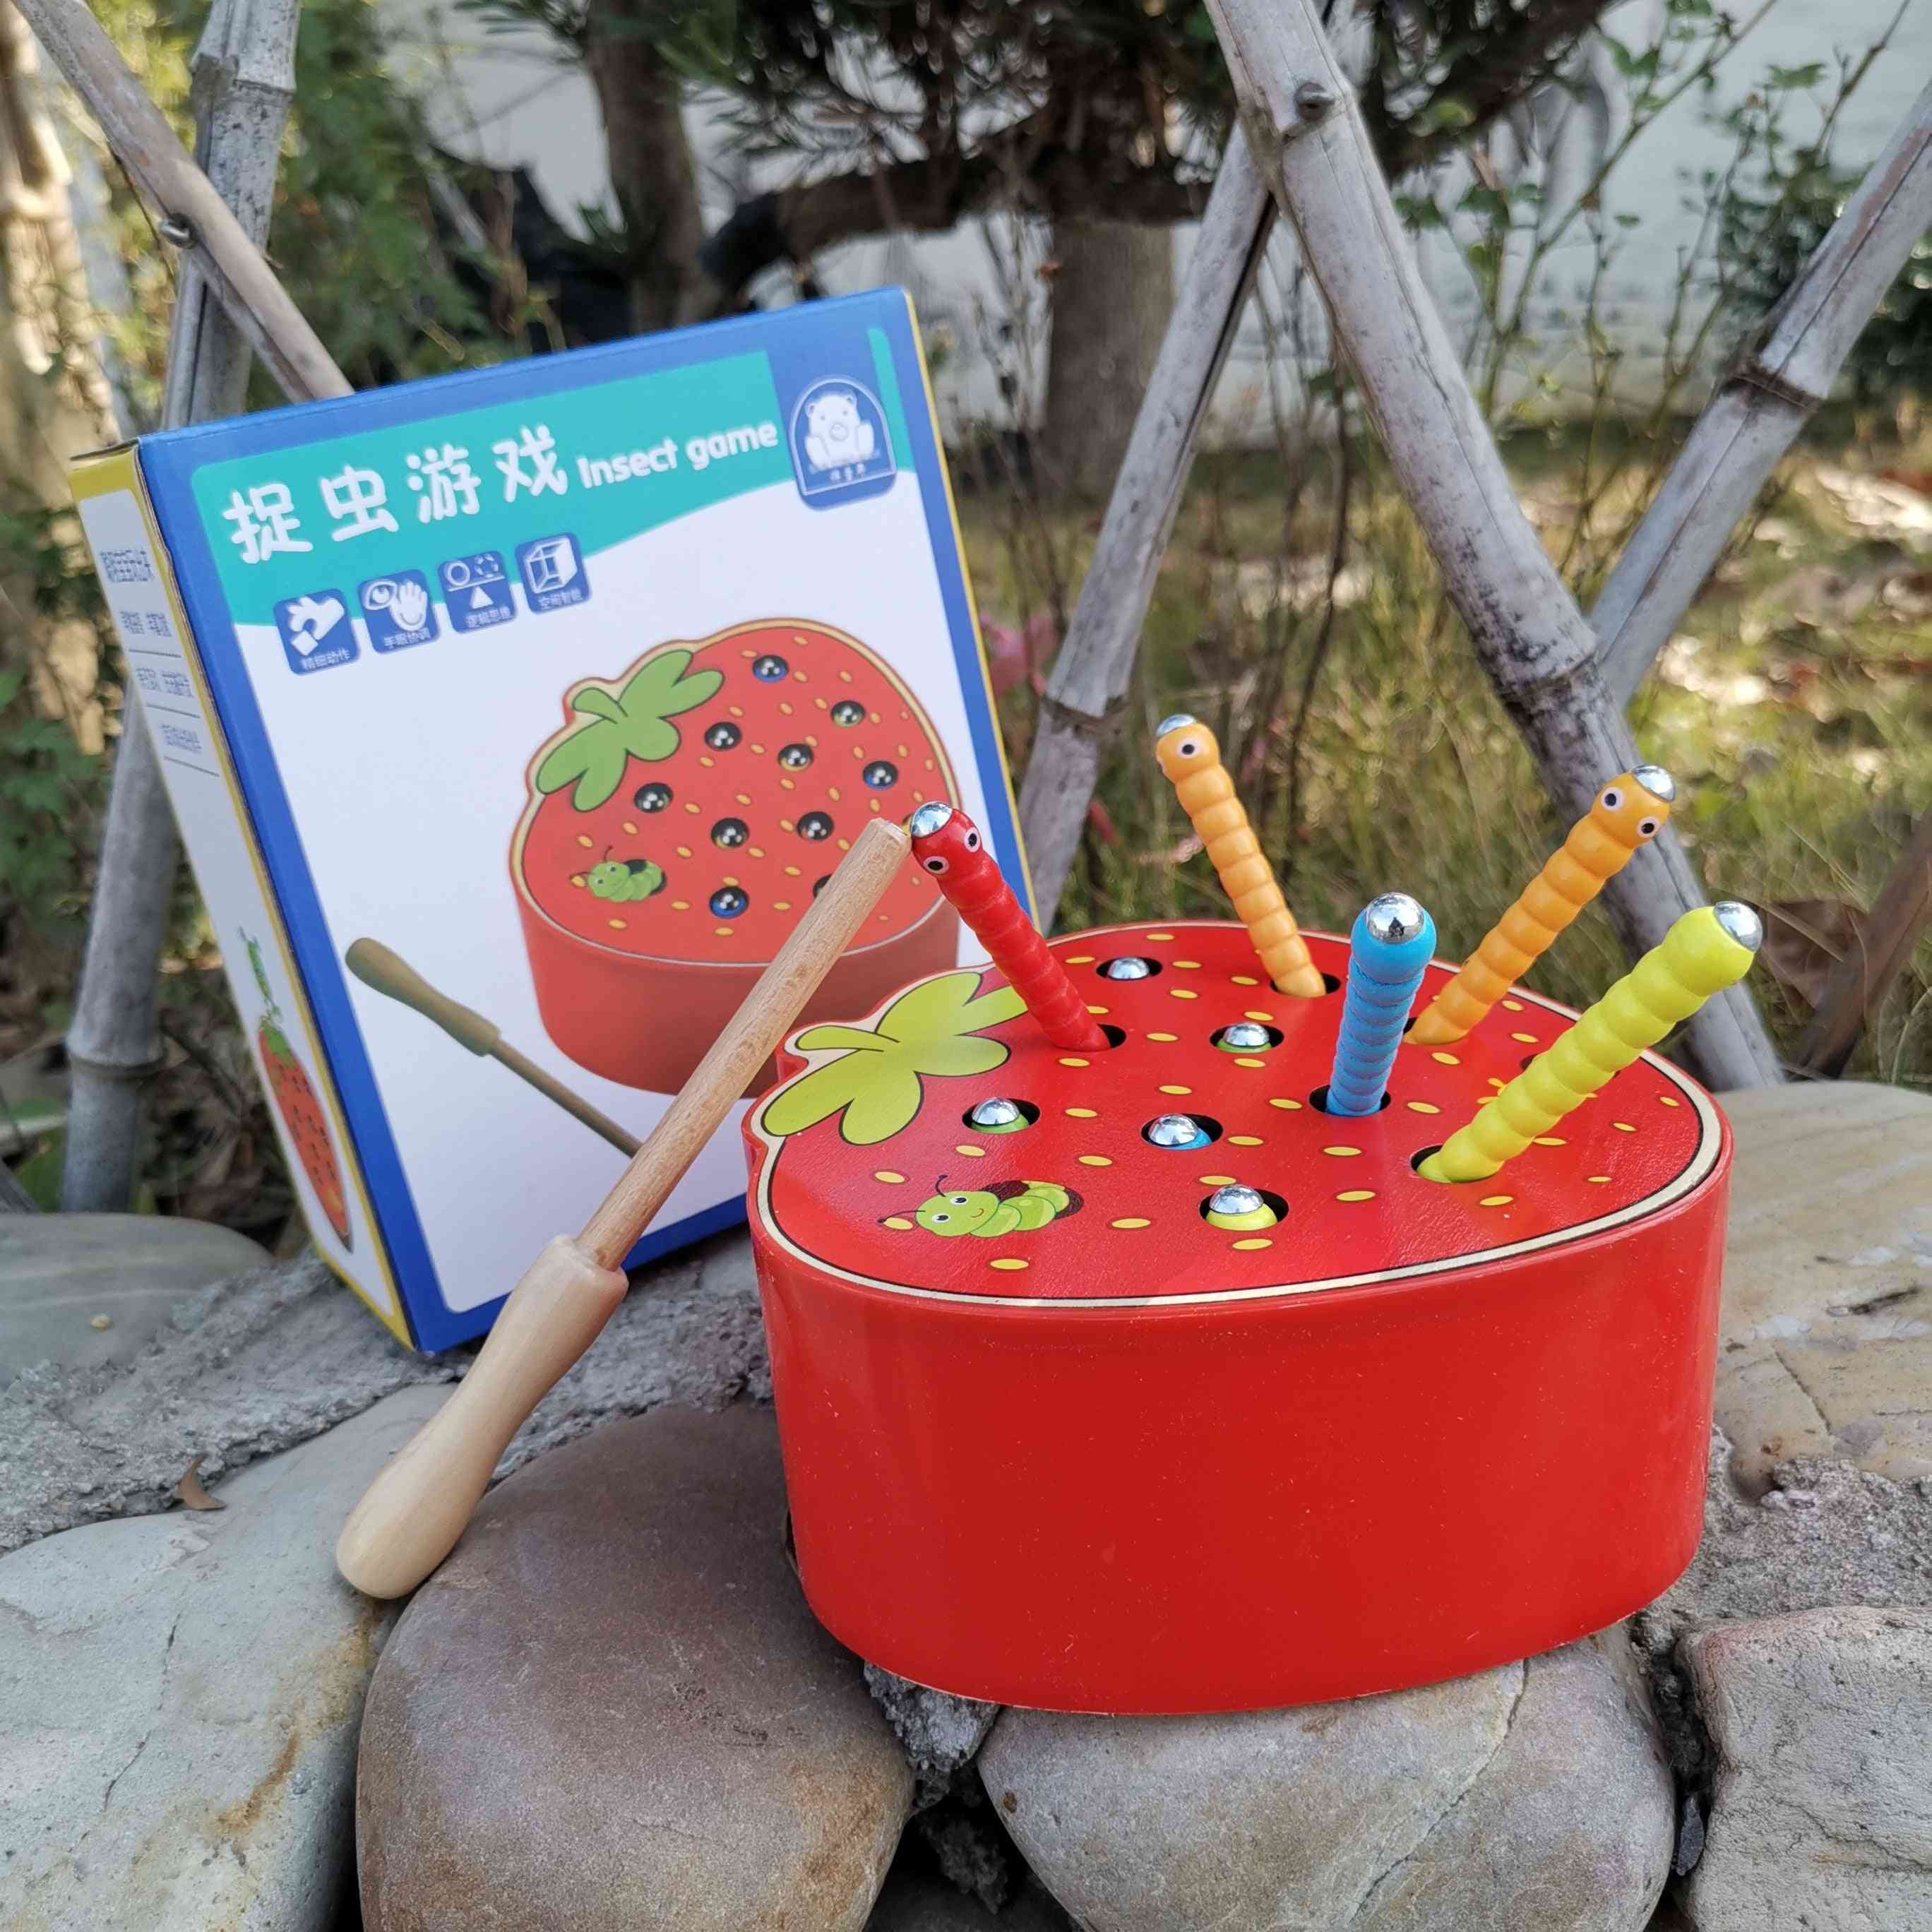 Rompecabezas 3d juguetes educativos para la primera infancia - captura de gusano juego color cognitivo magnético fresa manzana - caqui oscuro